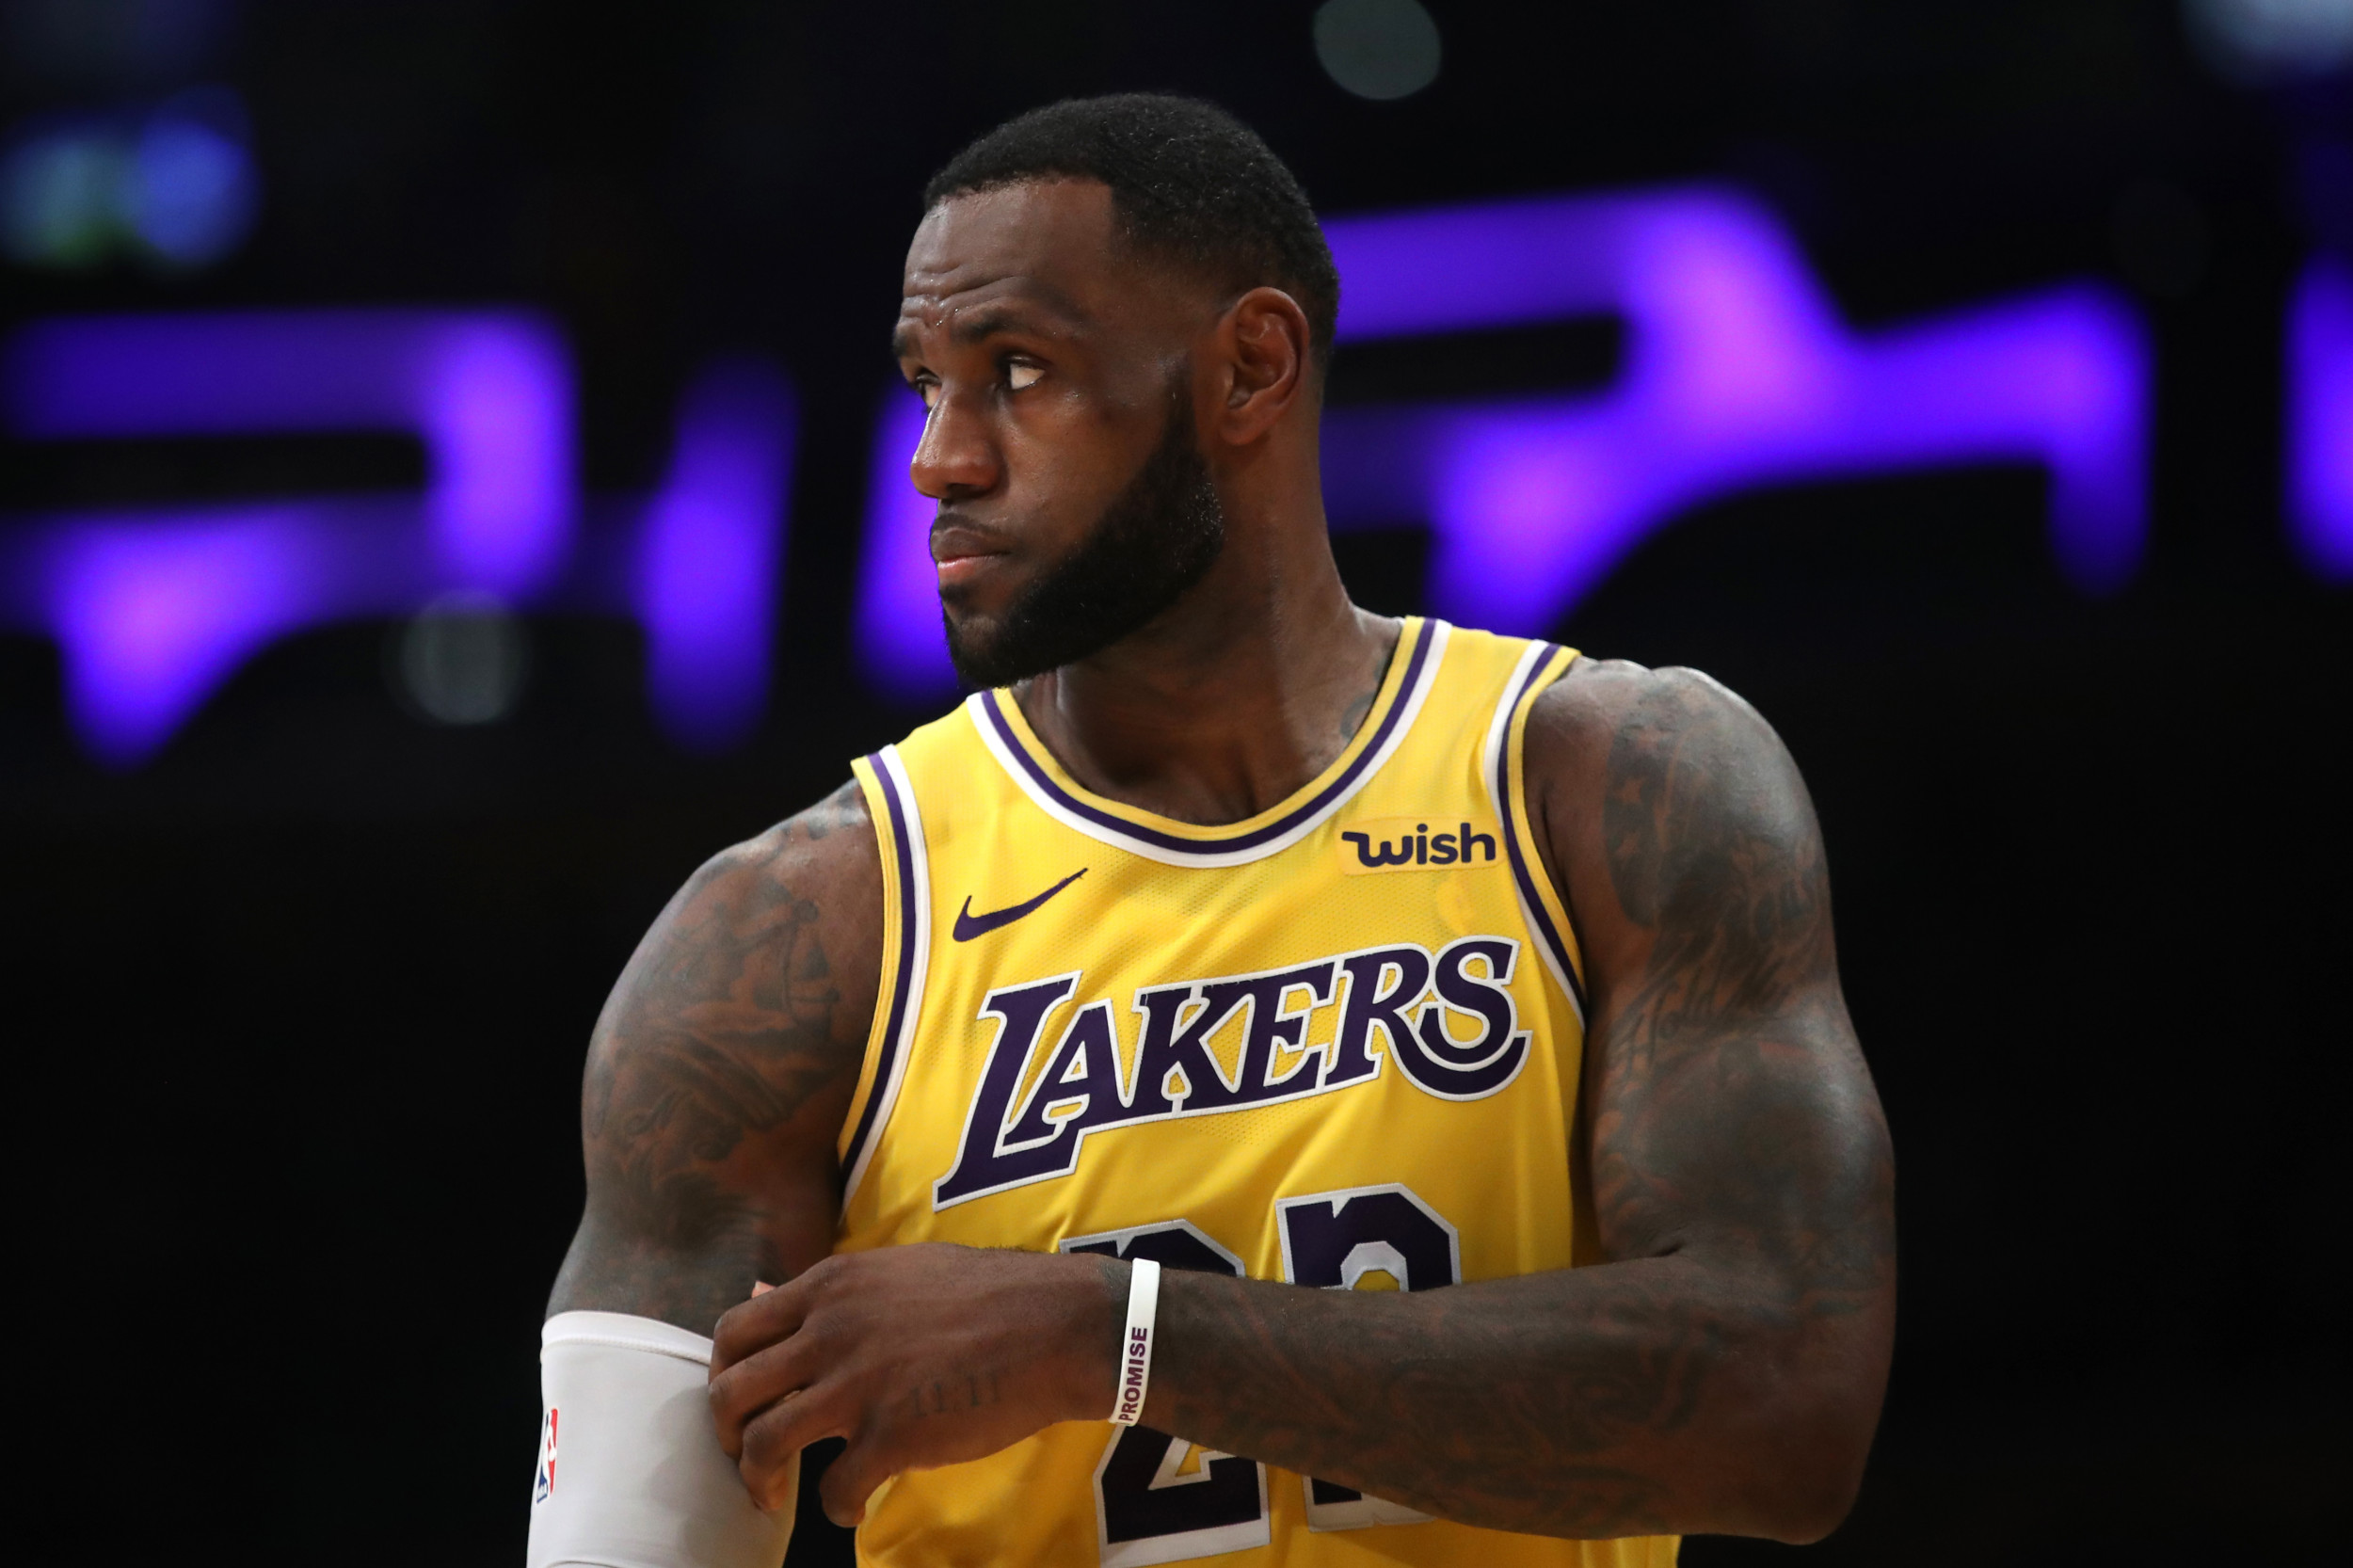 NBA Preseason 2019 How to Watch, Live Stream Games, Dates, Full Schedule